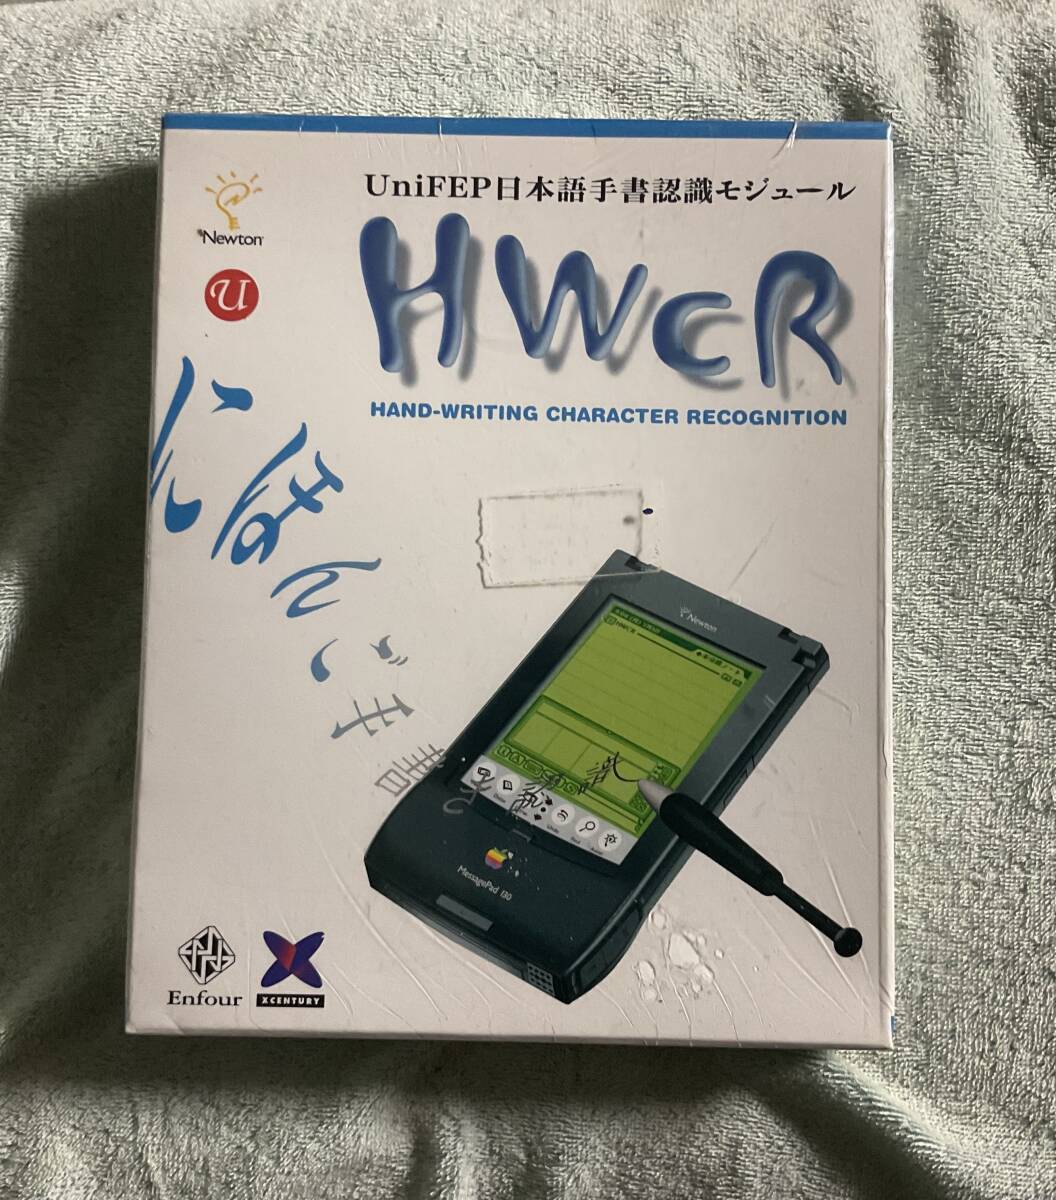 ◇Apple Newton MessagePad用 HWCR 日本語手書認識モジュール◇の画像1